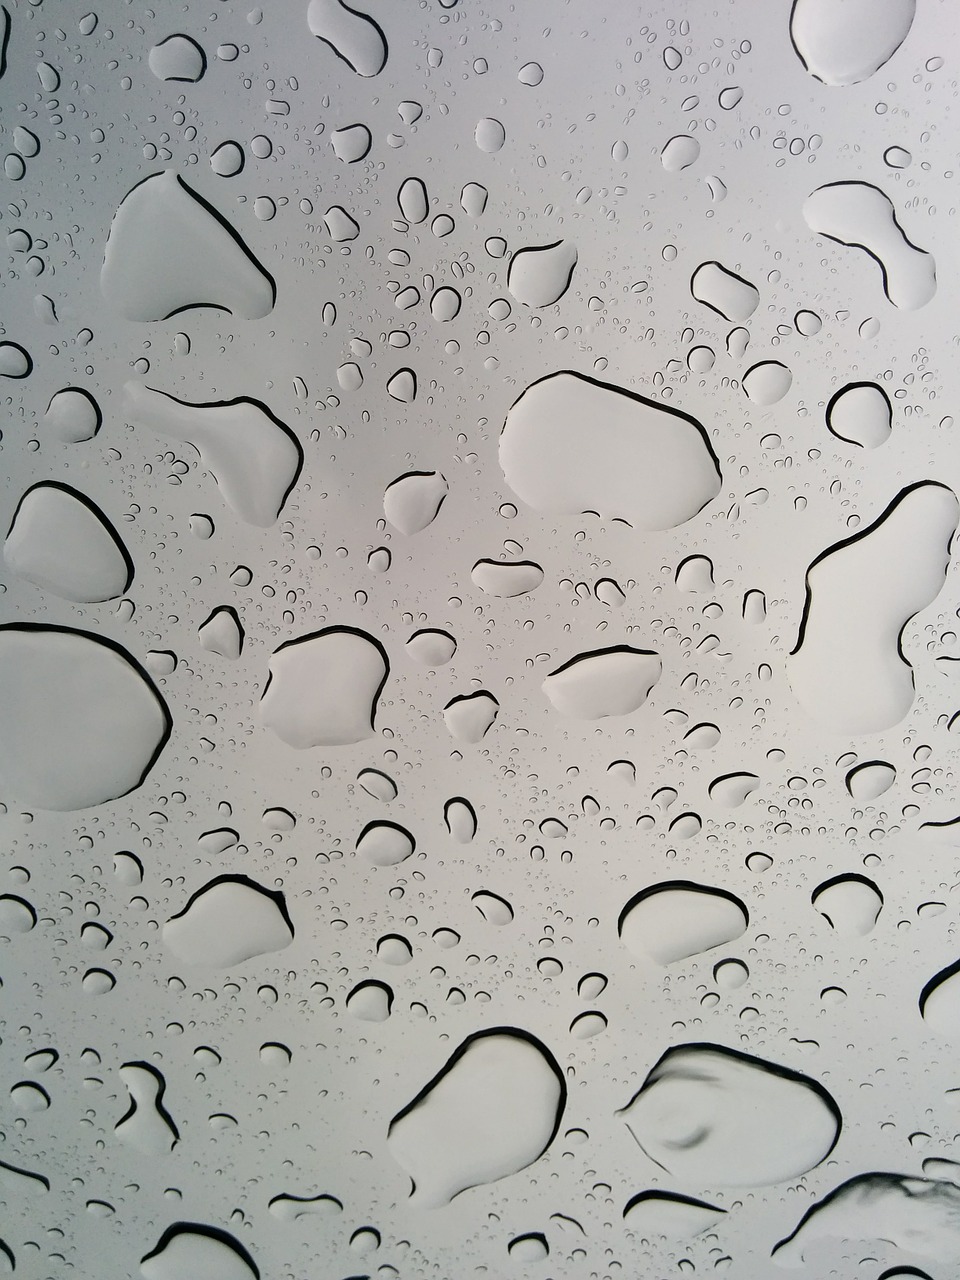 rain windshield background free photo